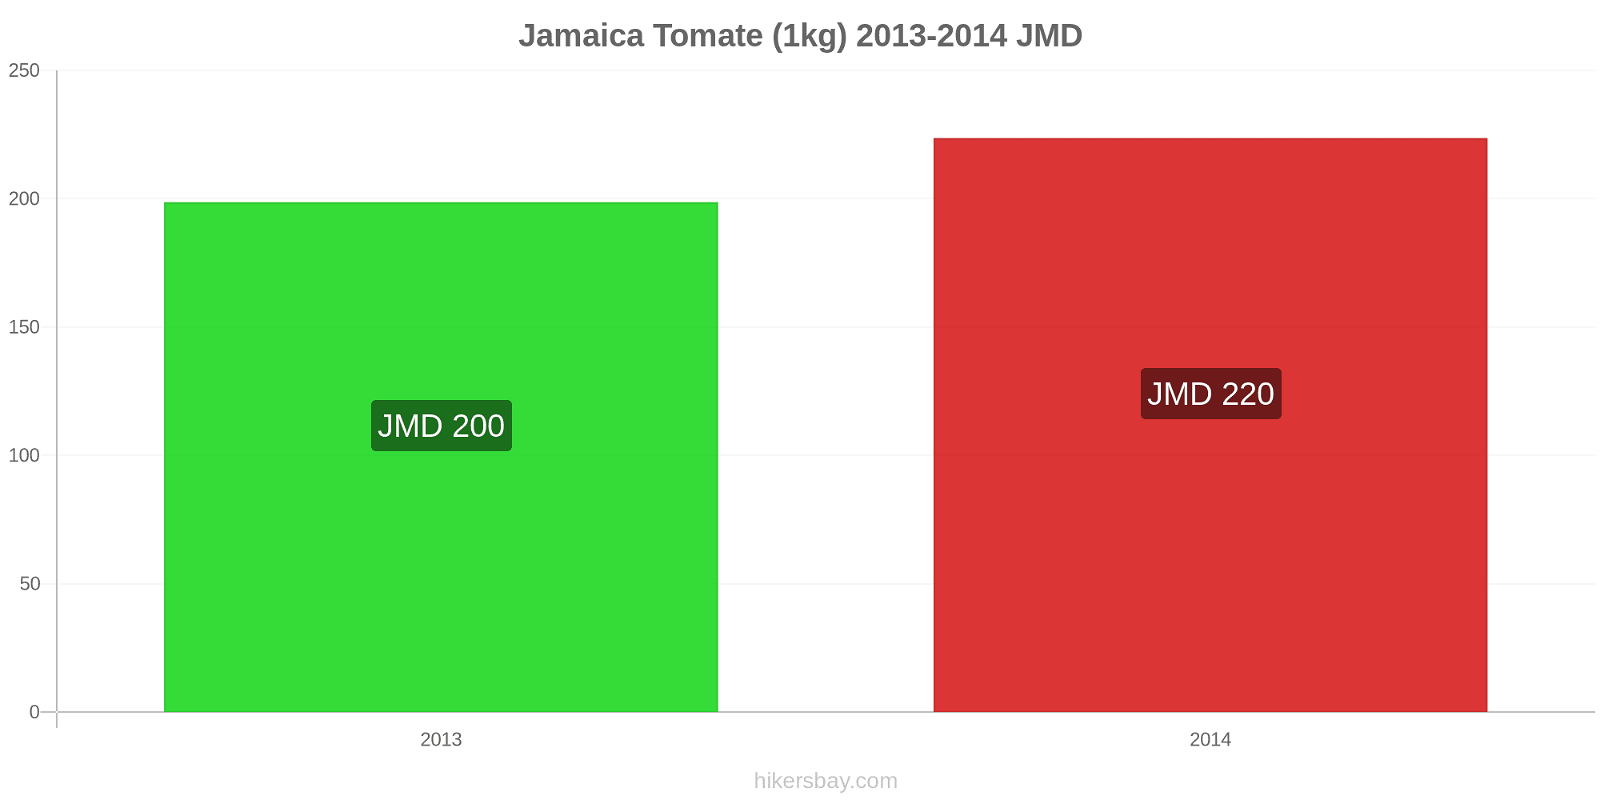 Jamaica cambios de precios Tomate (1kg) hikersbay.com